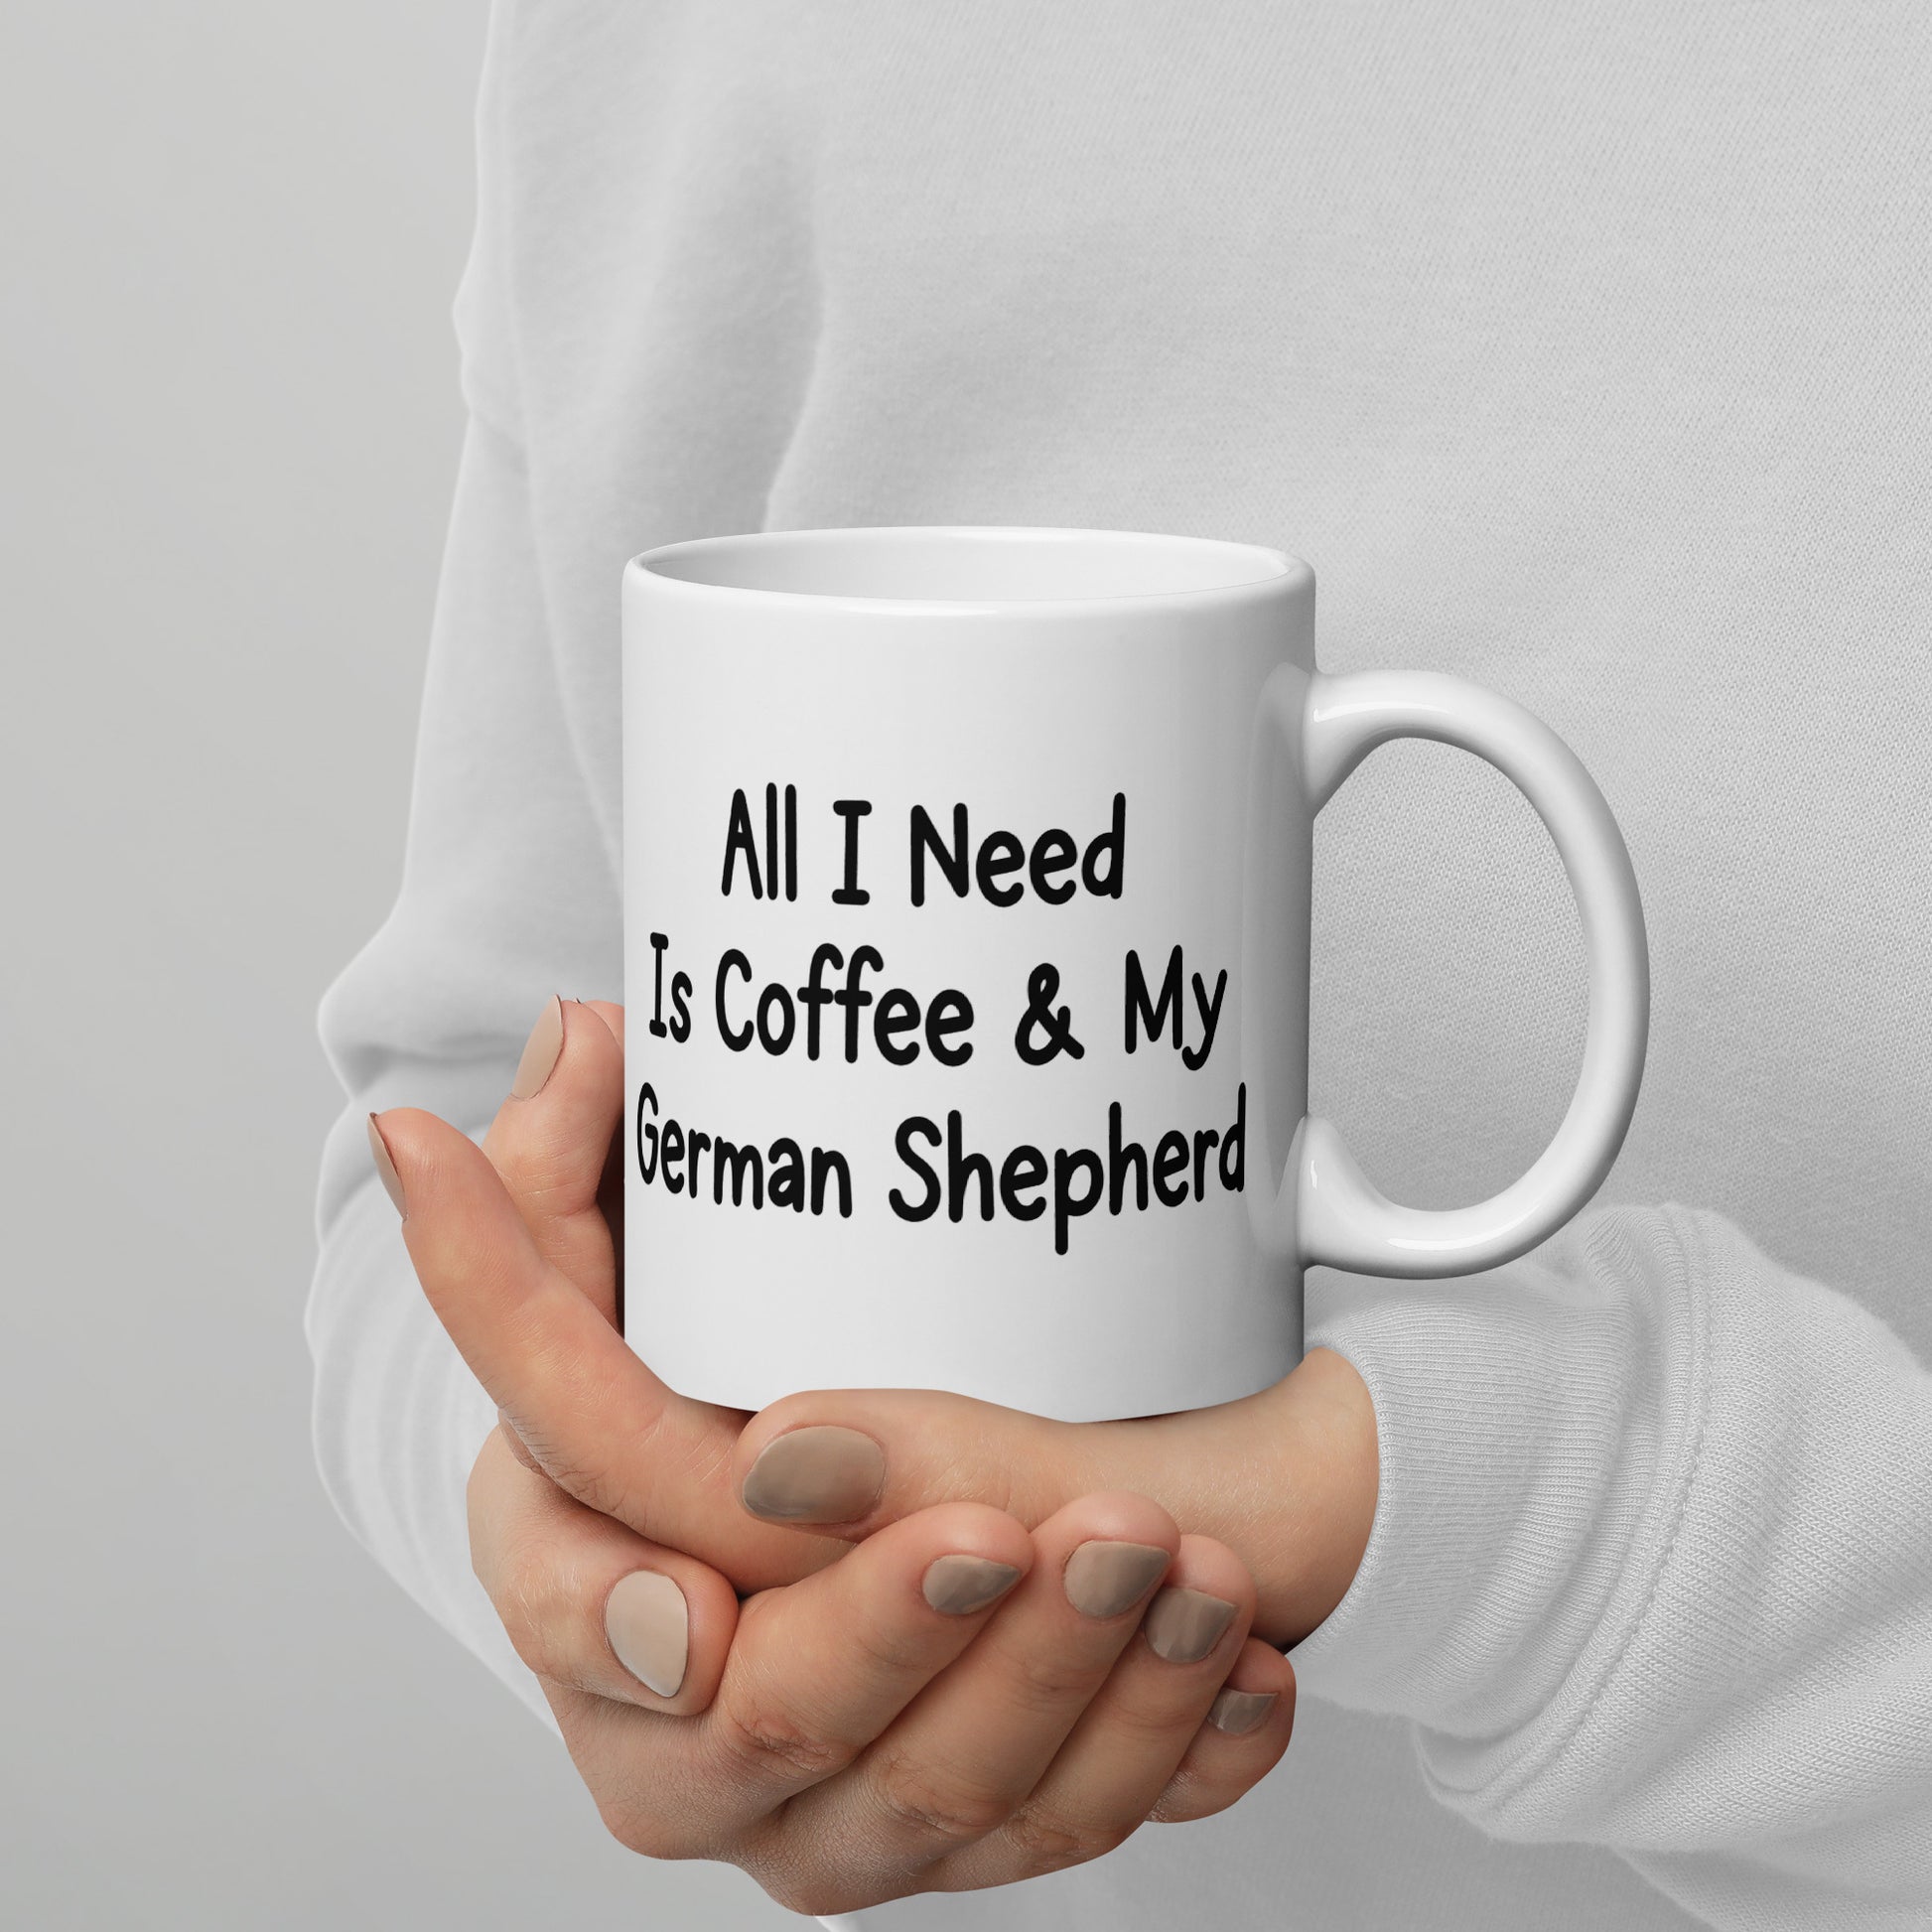 All I need is coffee & my German Shepherd mug by Dog Artistry.